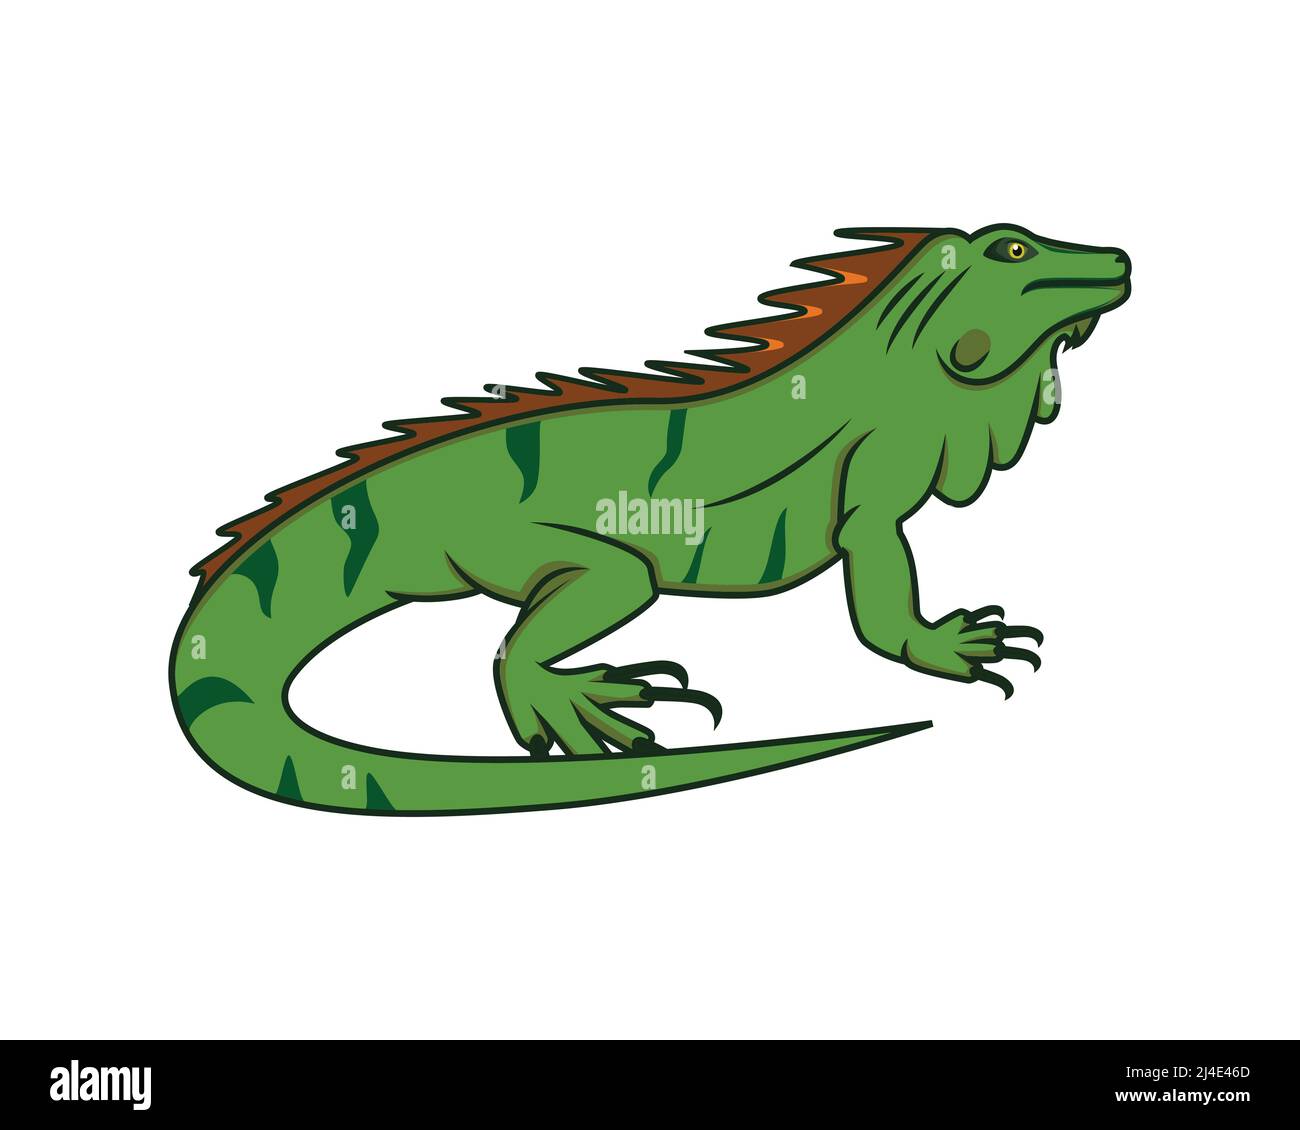 Detaillierter Crawling Iguana der Reptil Animal Illustration Vektor Stock Vektor